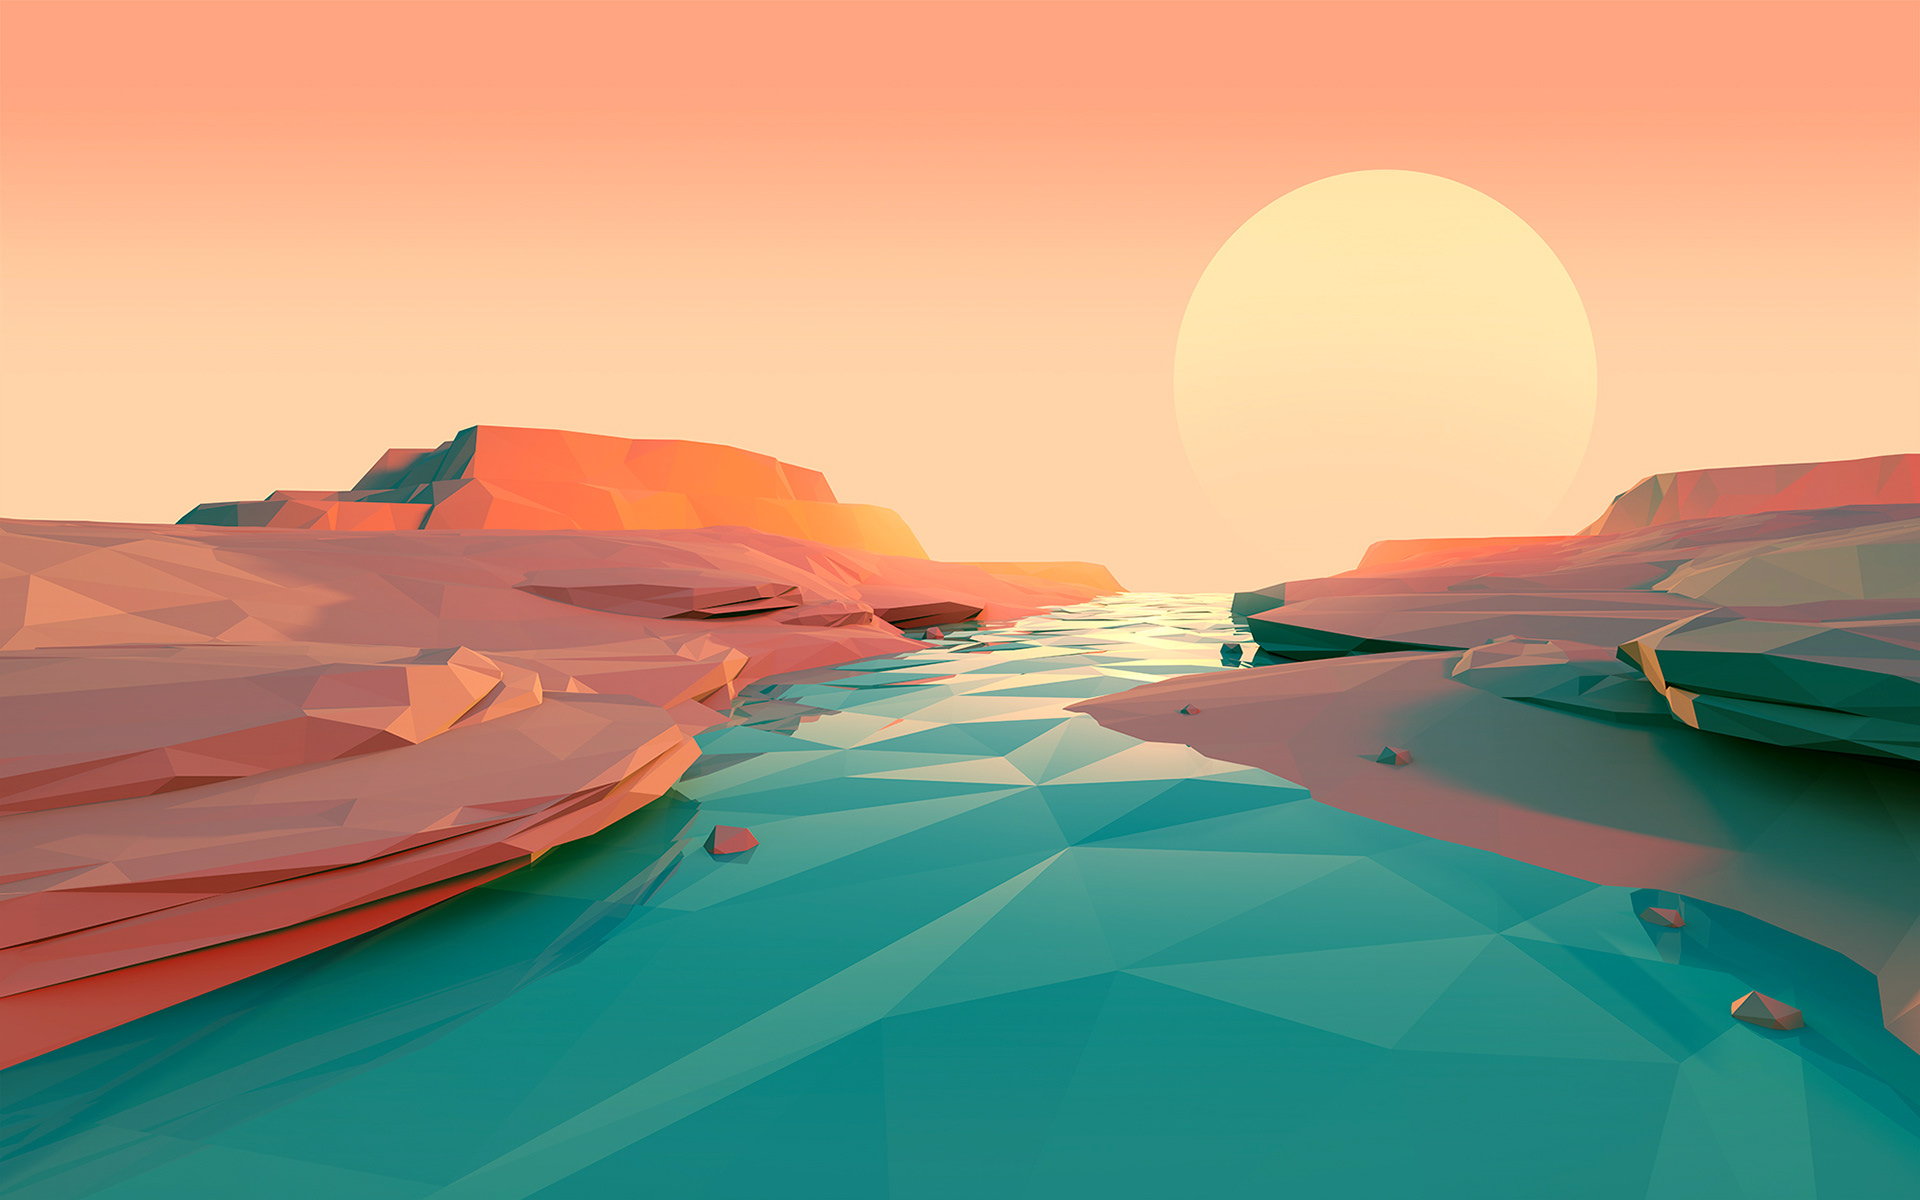 Polygon Lake Sunset Minimalist, HD Artist, 4k Wallpaper, Image, Background, Photo and Picture